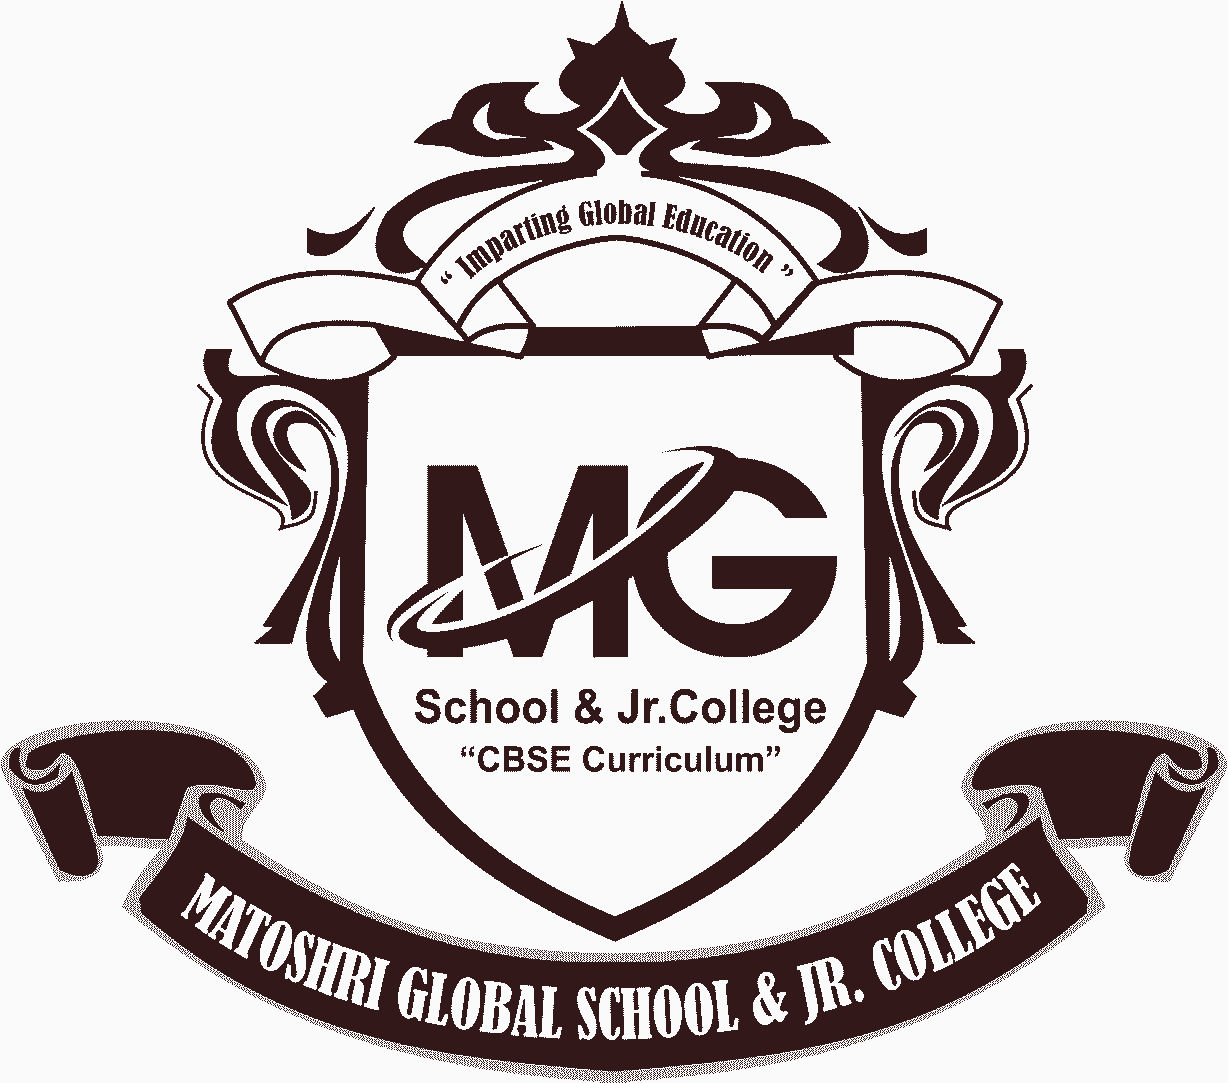 Matoshri Global School & Jr College